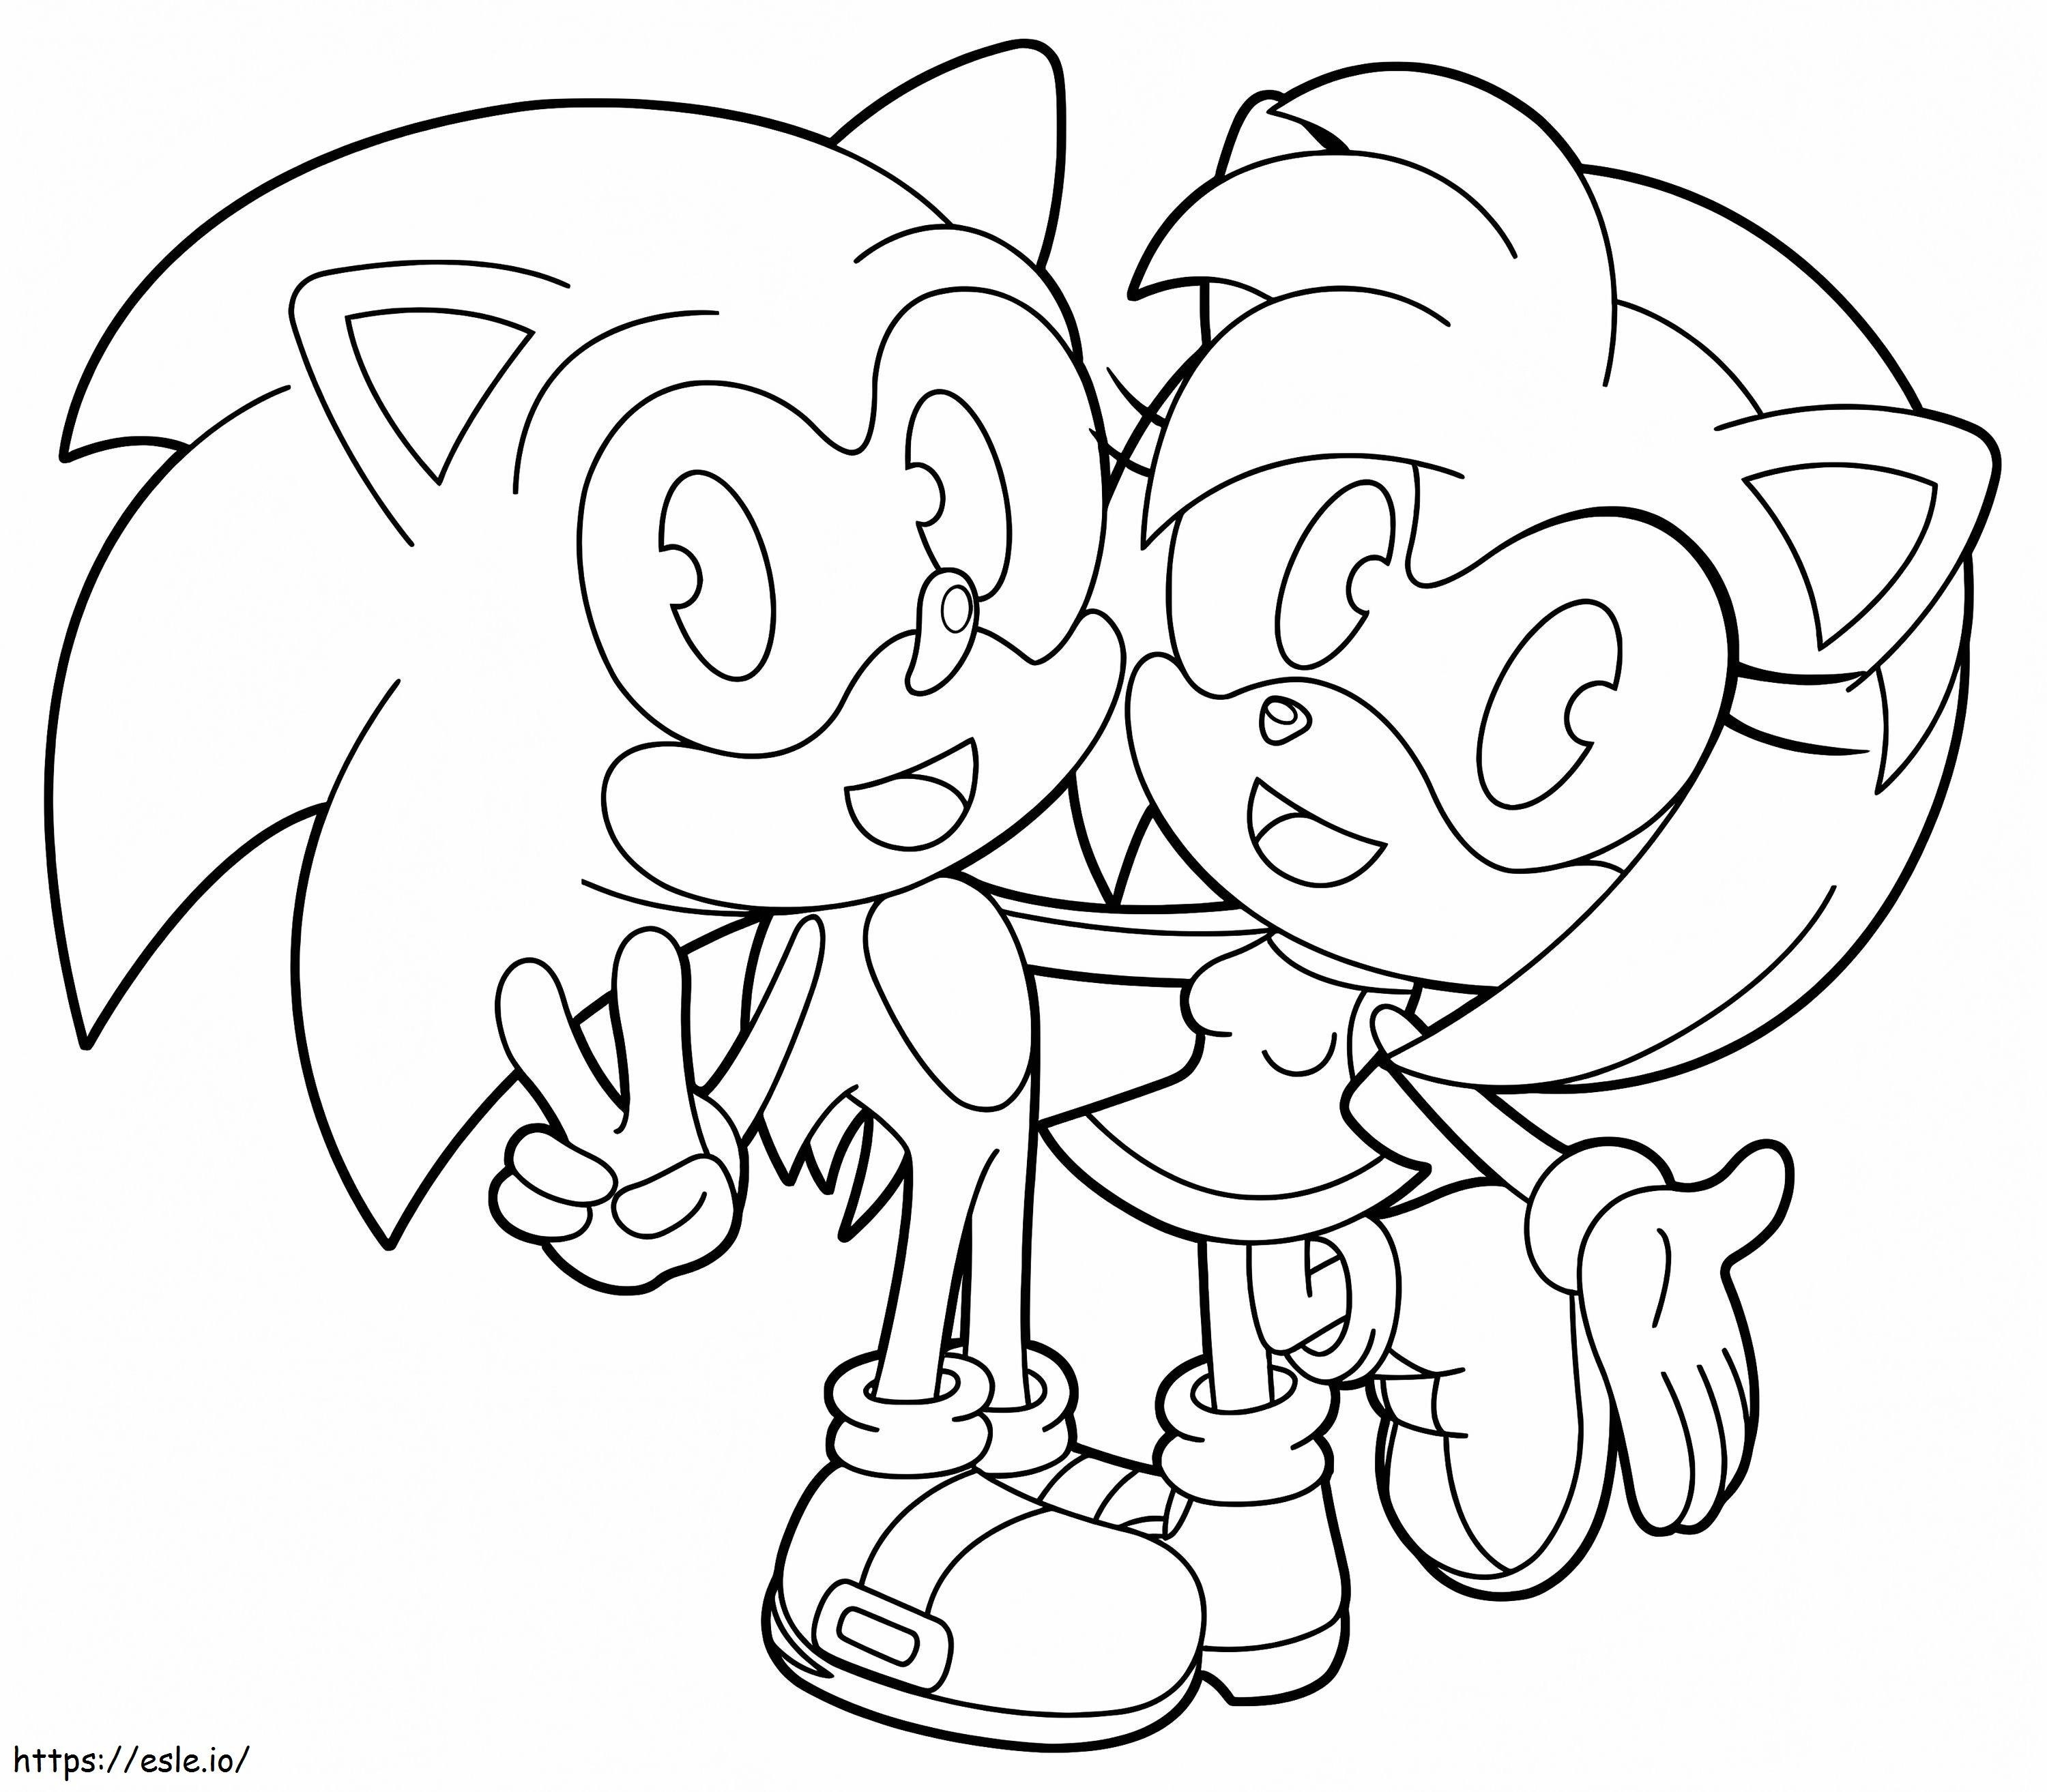 Amy Rose i Sonic kolorowanka